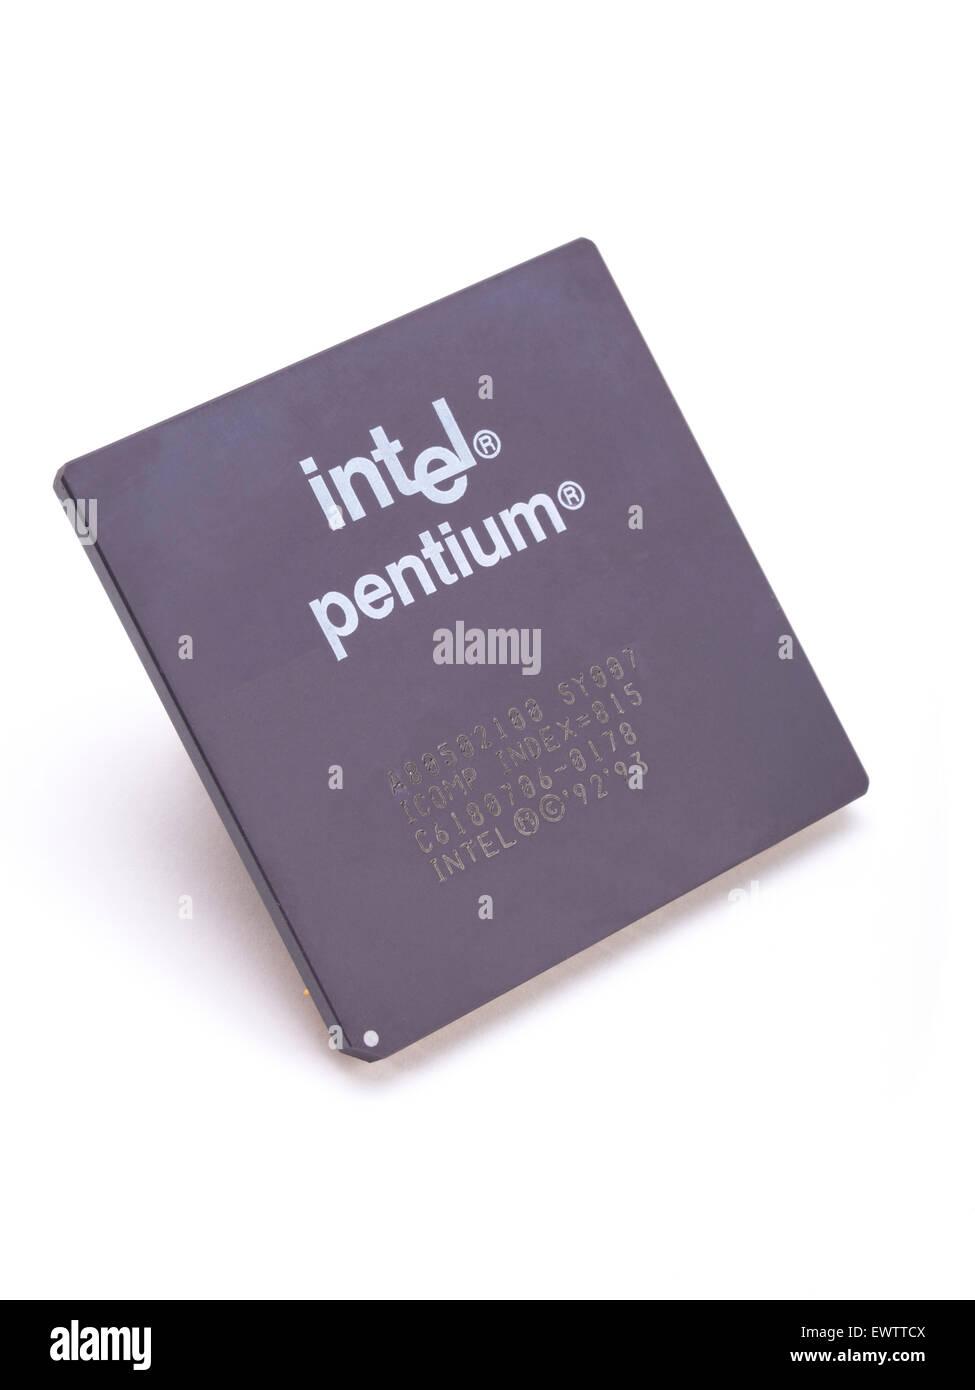 Intel Pentium 100mhz cpu chip A80502100 1994 Foto de stock